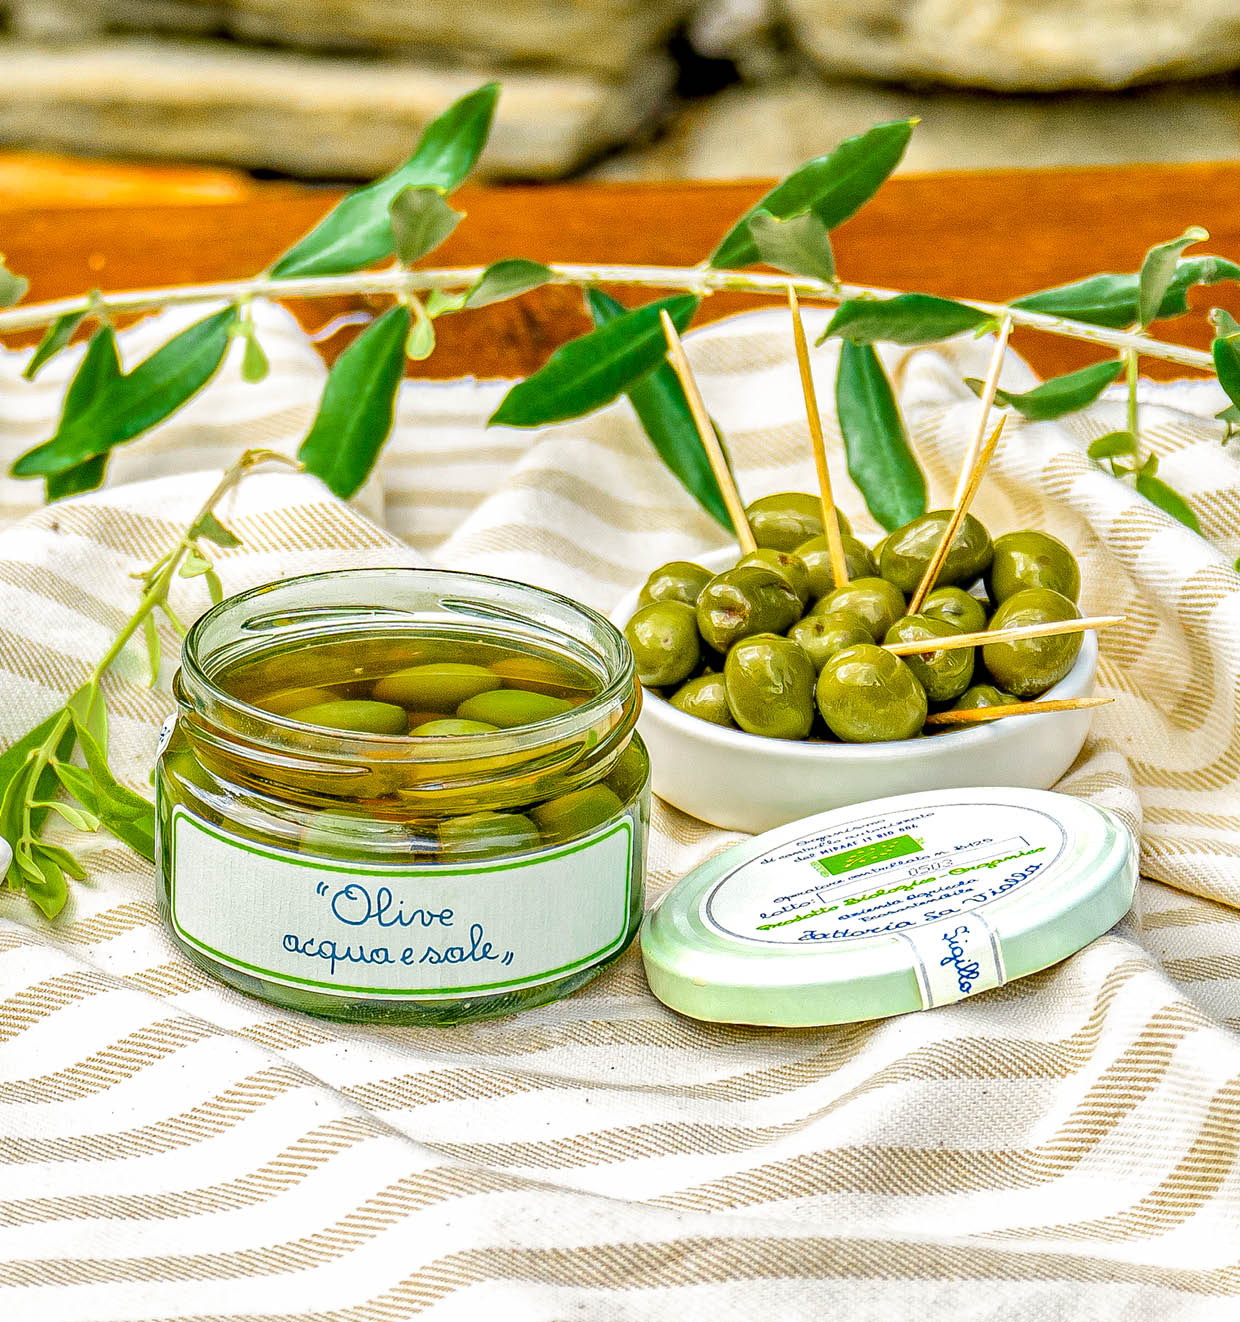 Grüne Oliven nature